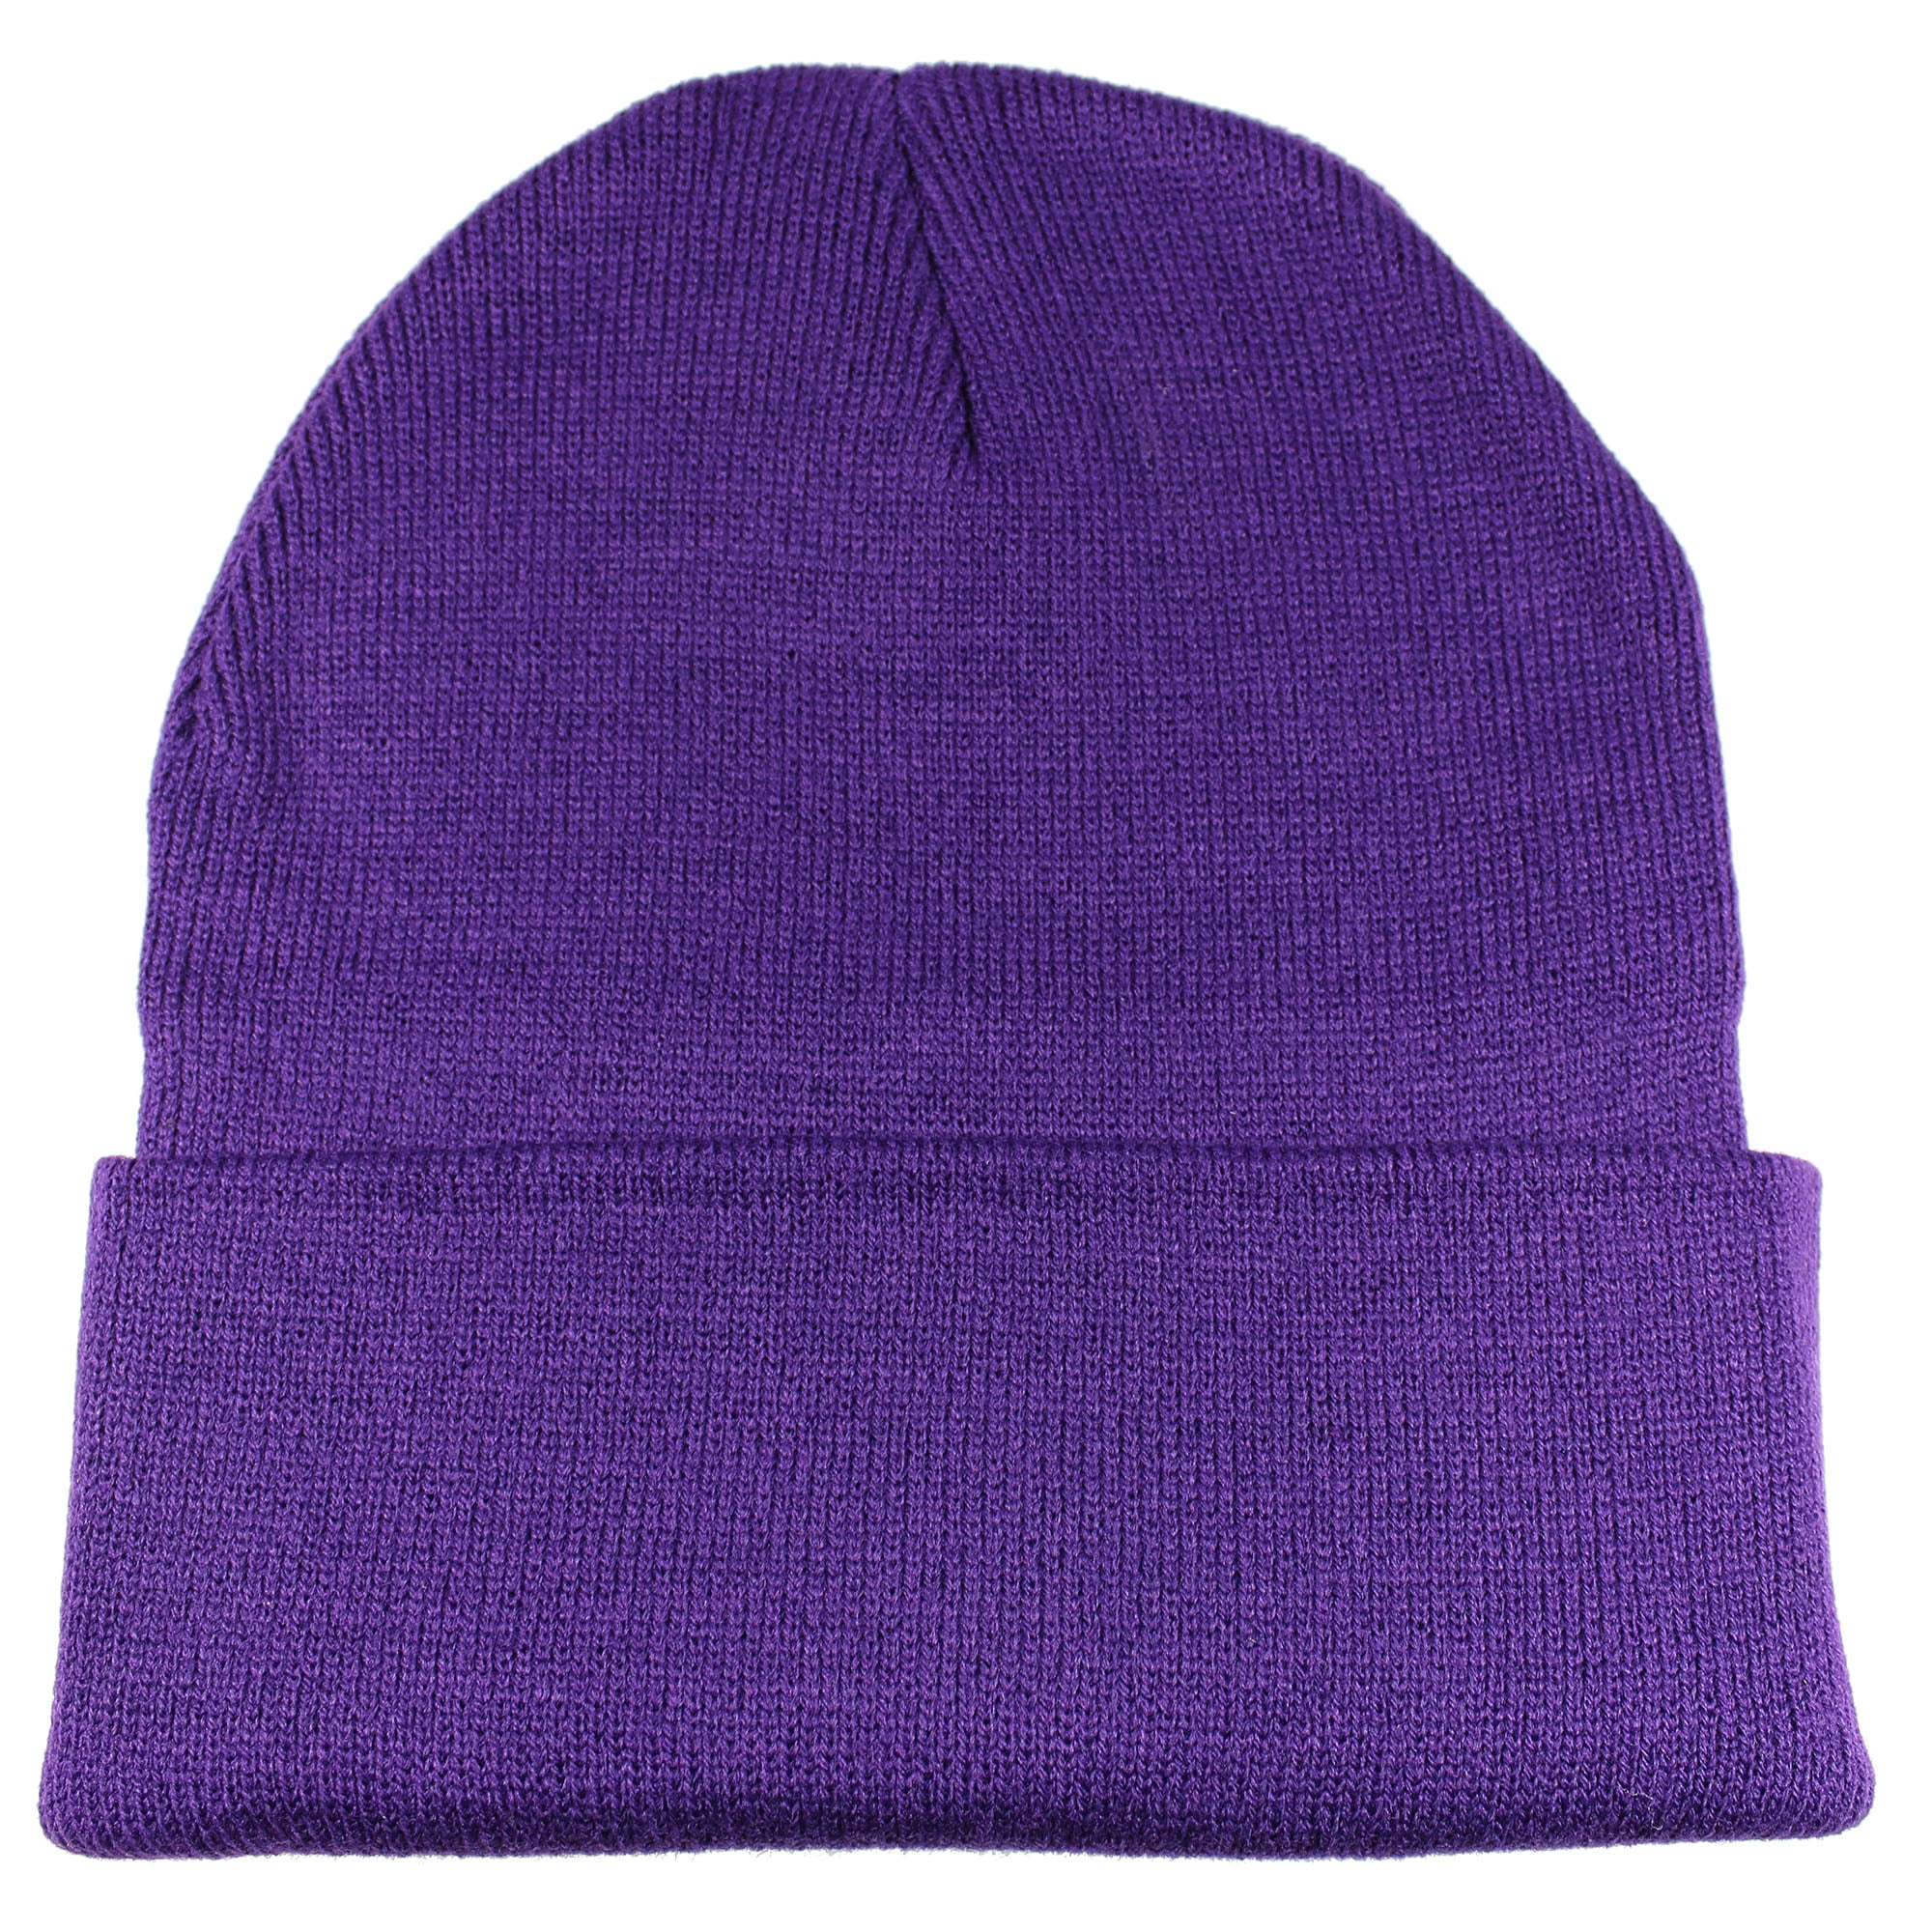 Gelante Beanie Hat Men Women Cuffed Plain Classic Knit Purple Cap 